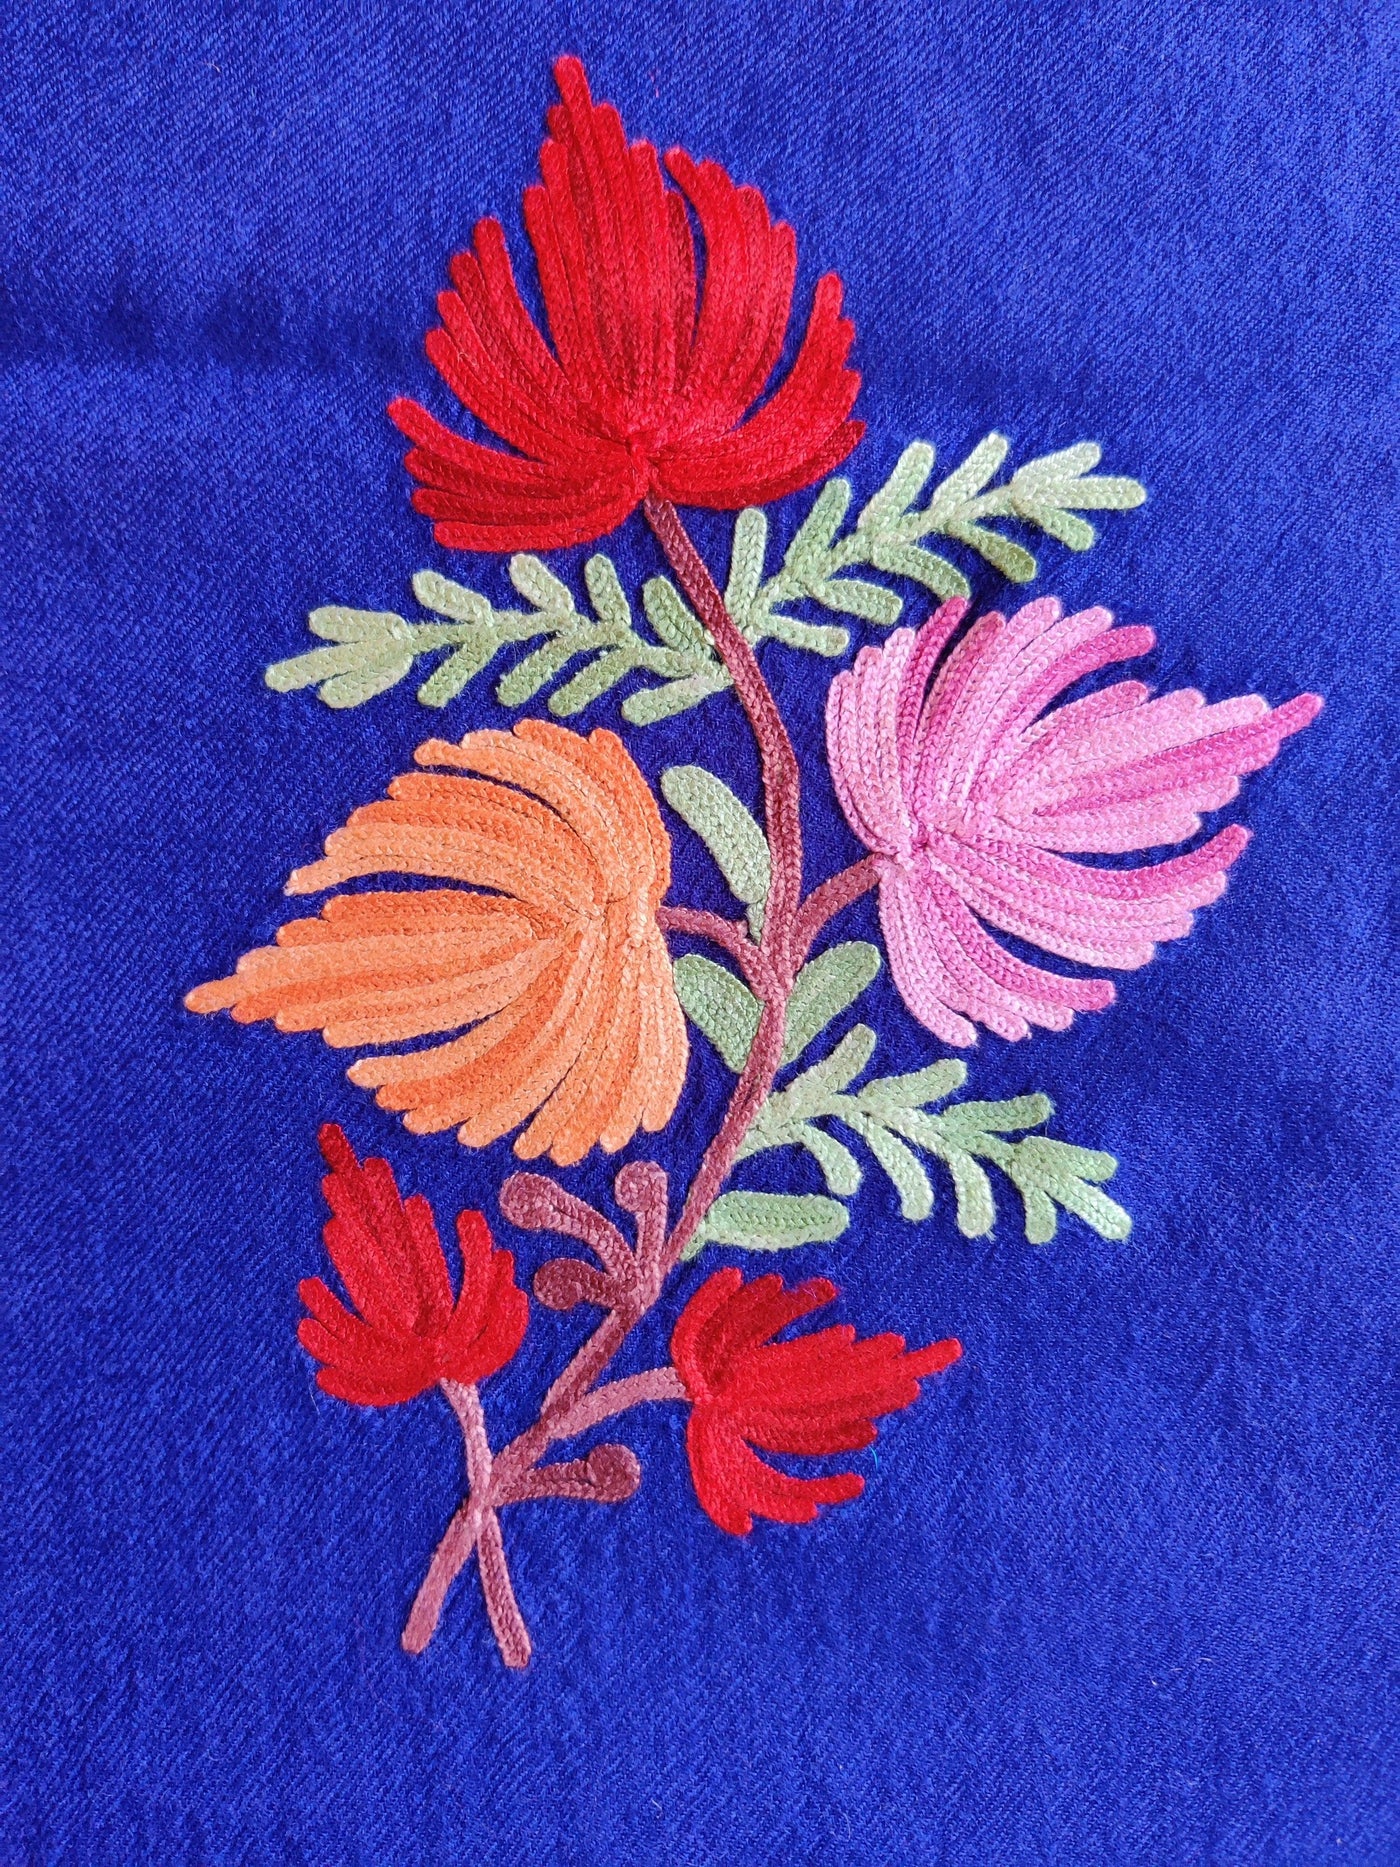 Floral Aari-Embroidered Blue Kashmiri Shawl - KashmKari